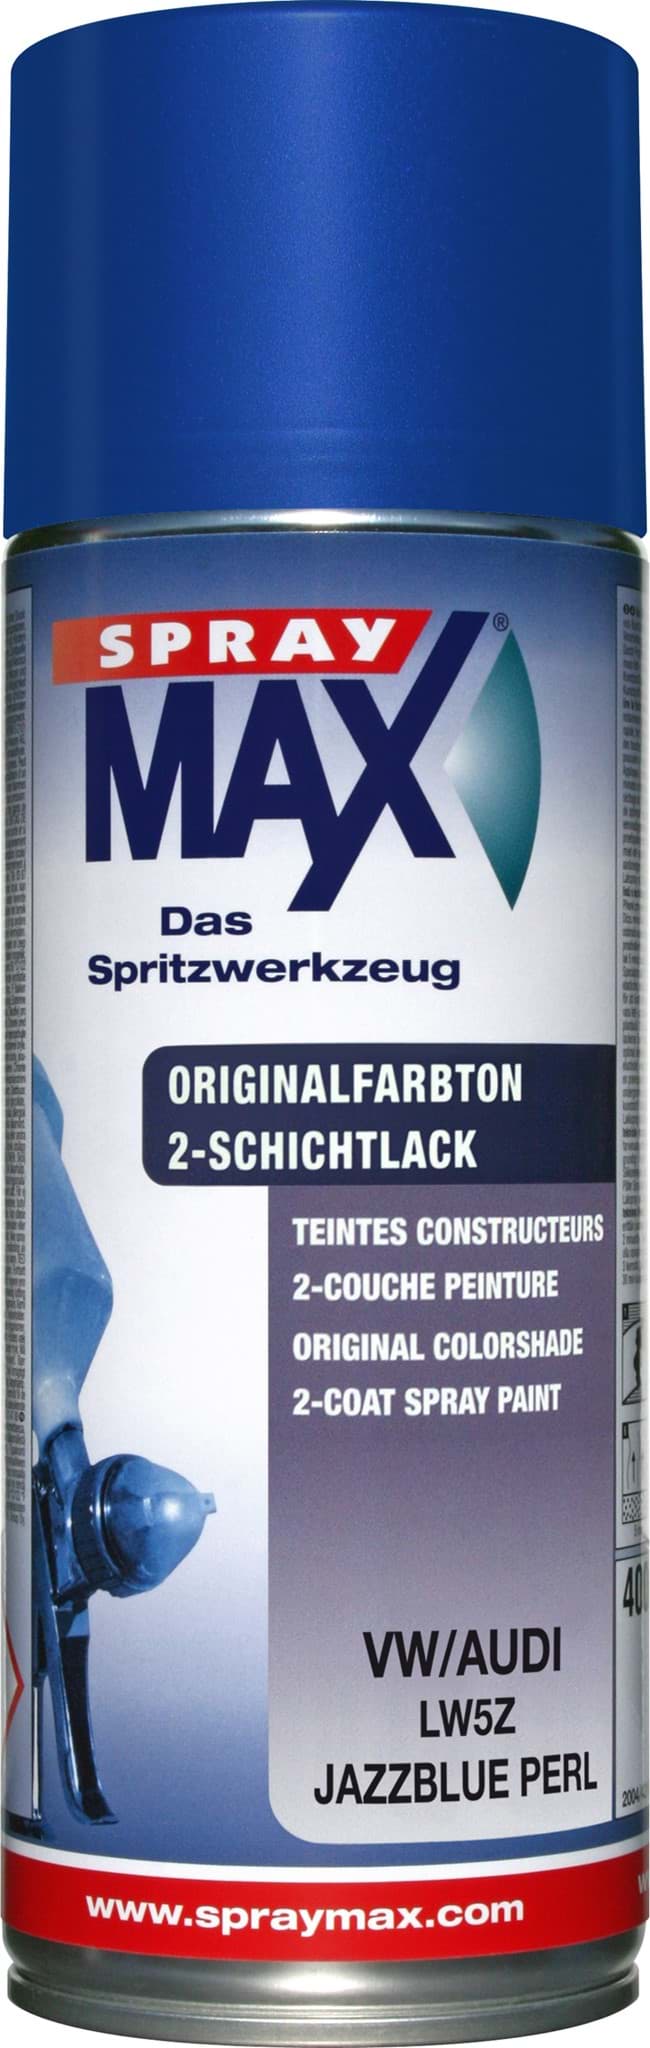 SprayMax Originalfarbton für VW LW5Z jazzblue perl resmi